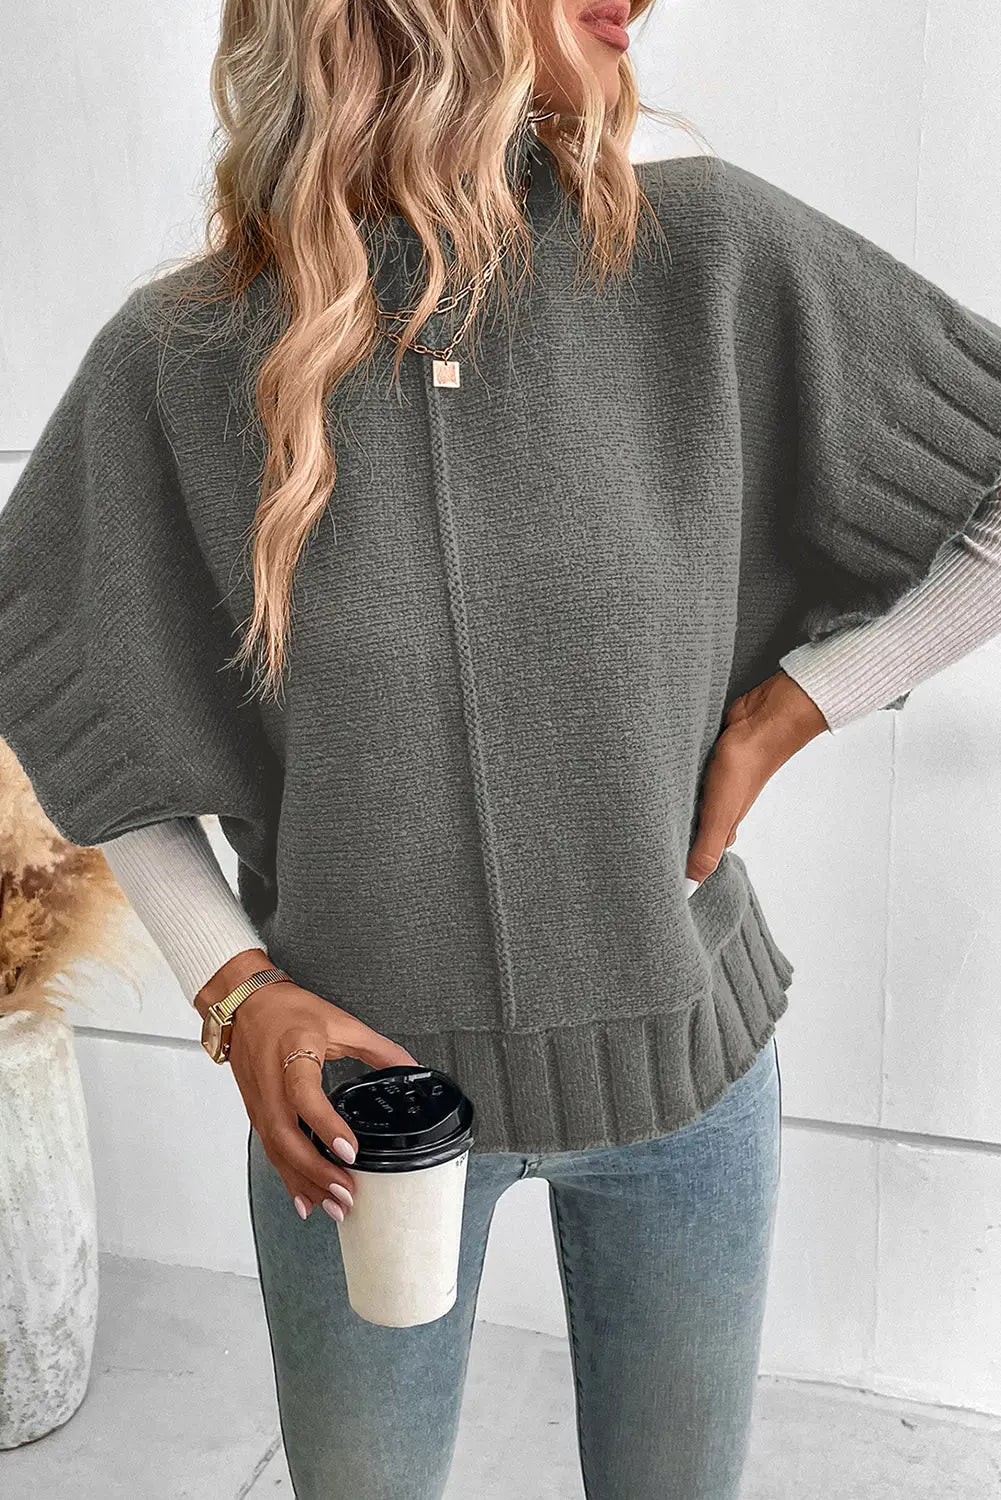 Medium grey mock neck batwing short sleeve knit sweater - sweaters & cardigans